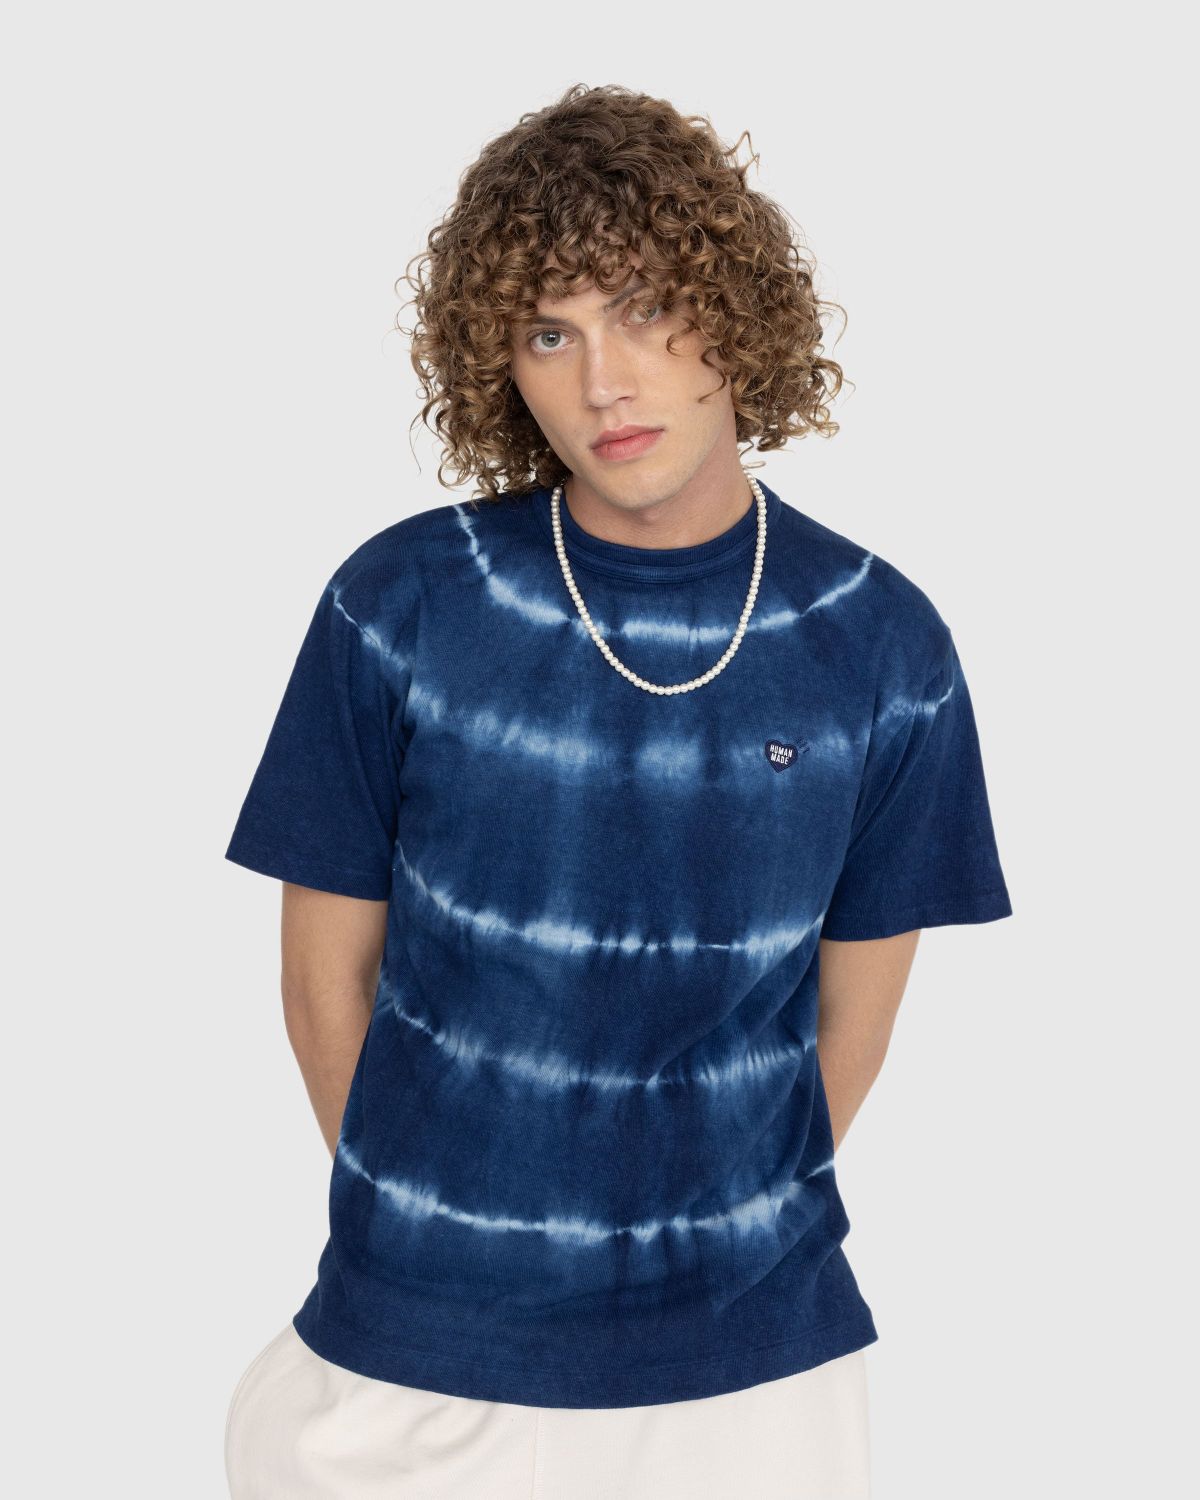 Human Made – Ningen-sei Indigo Dyed T-Shirt #1 Blue | Highsnobiety Shop